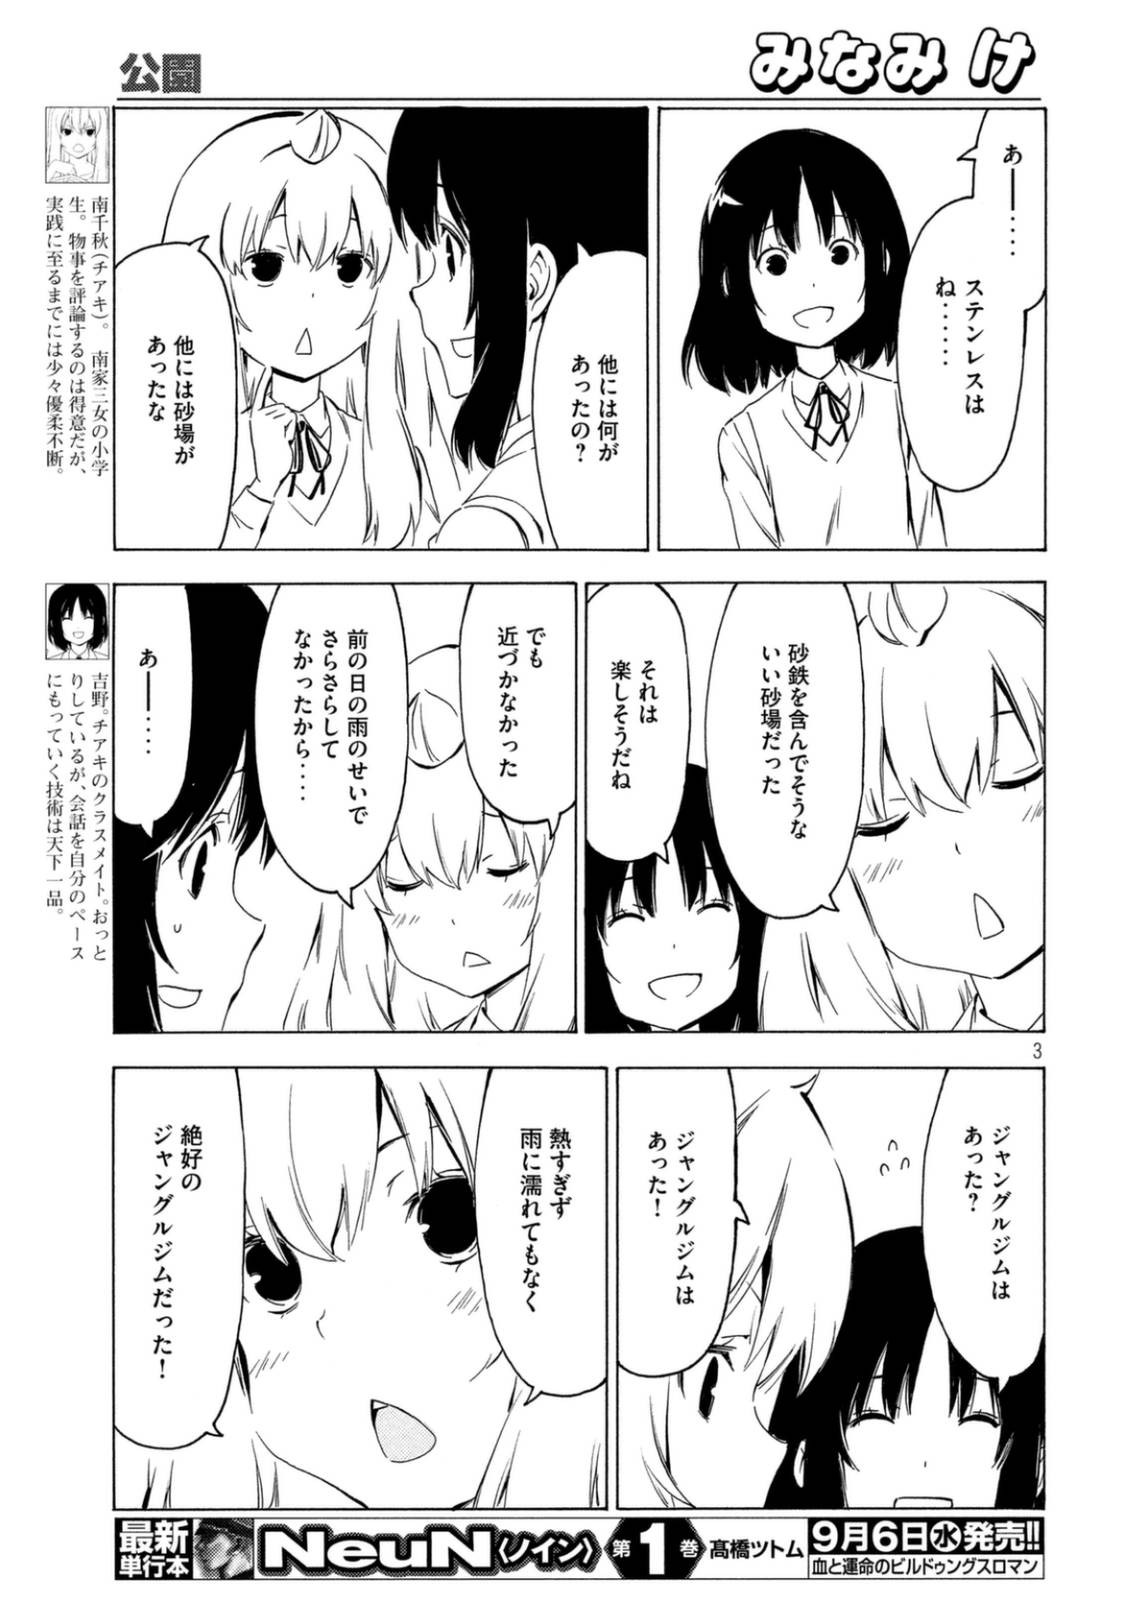 Minami-ke - Chapter 324 - Page 3